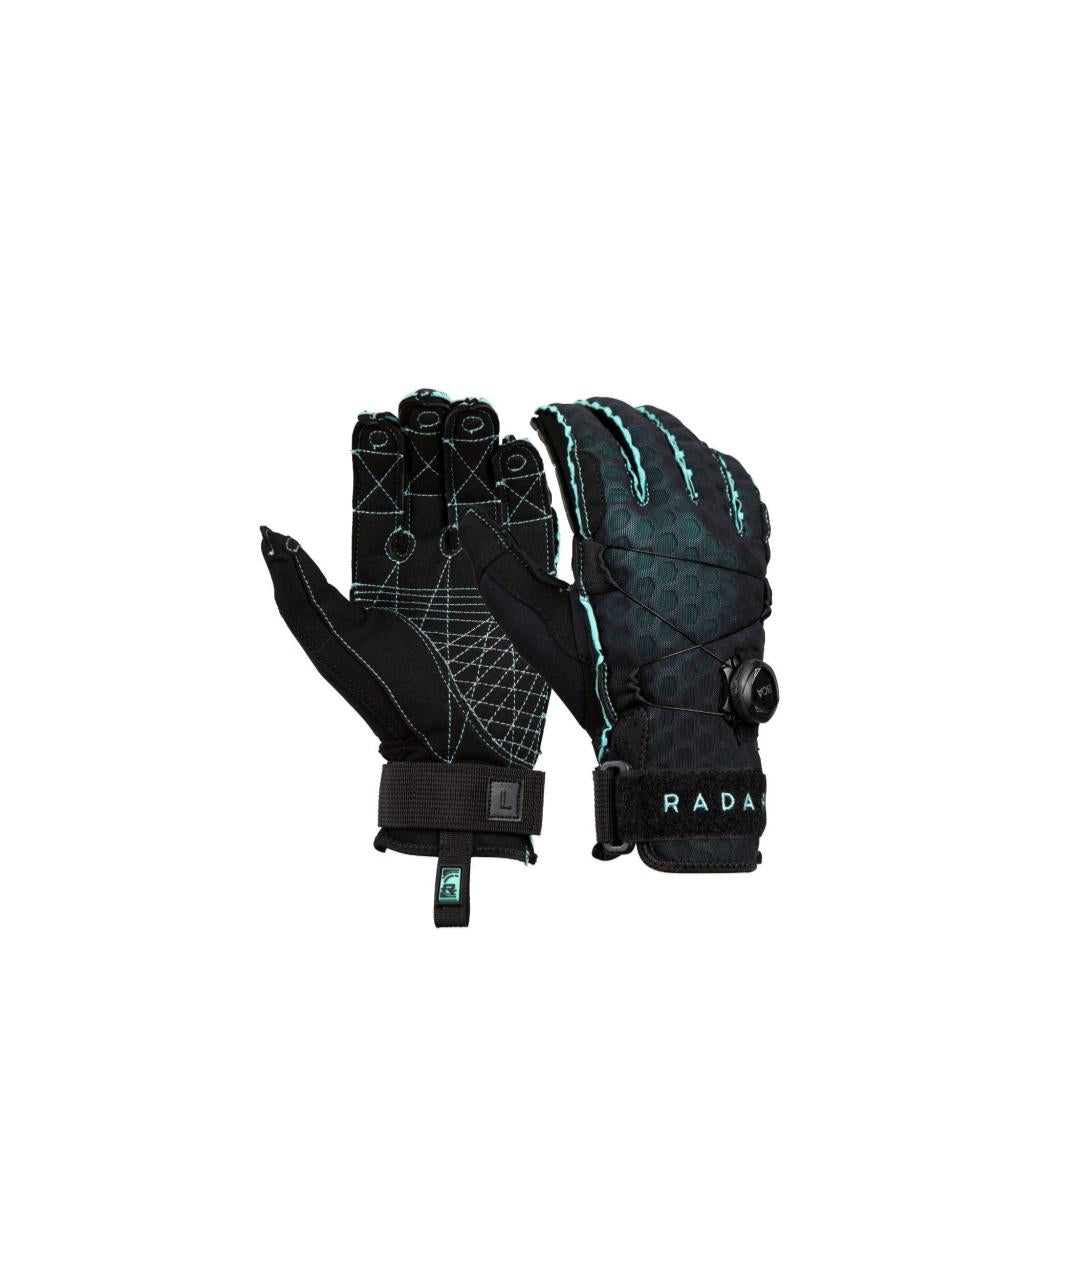 Vapor-A Boa Inside-Out Glove ll S